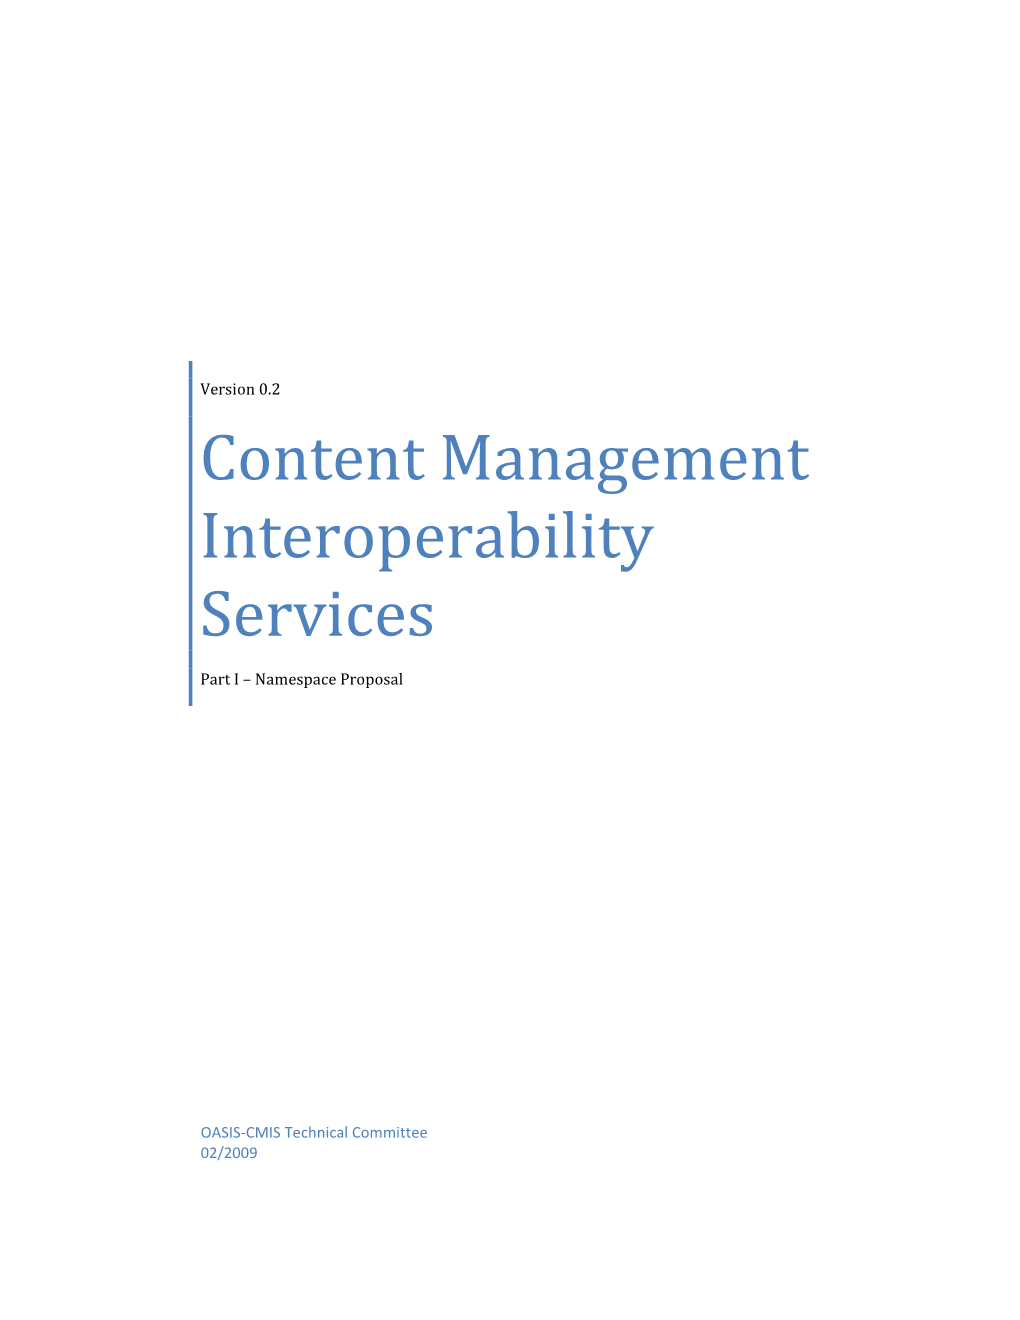 Content Management Interoperability Services